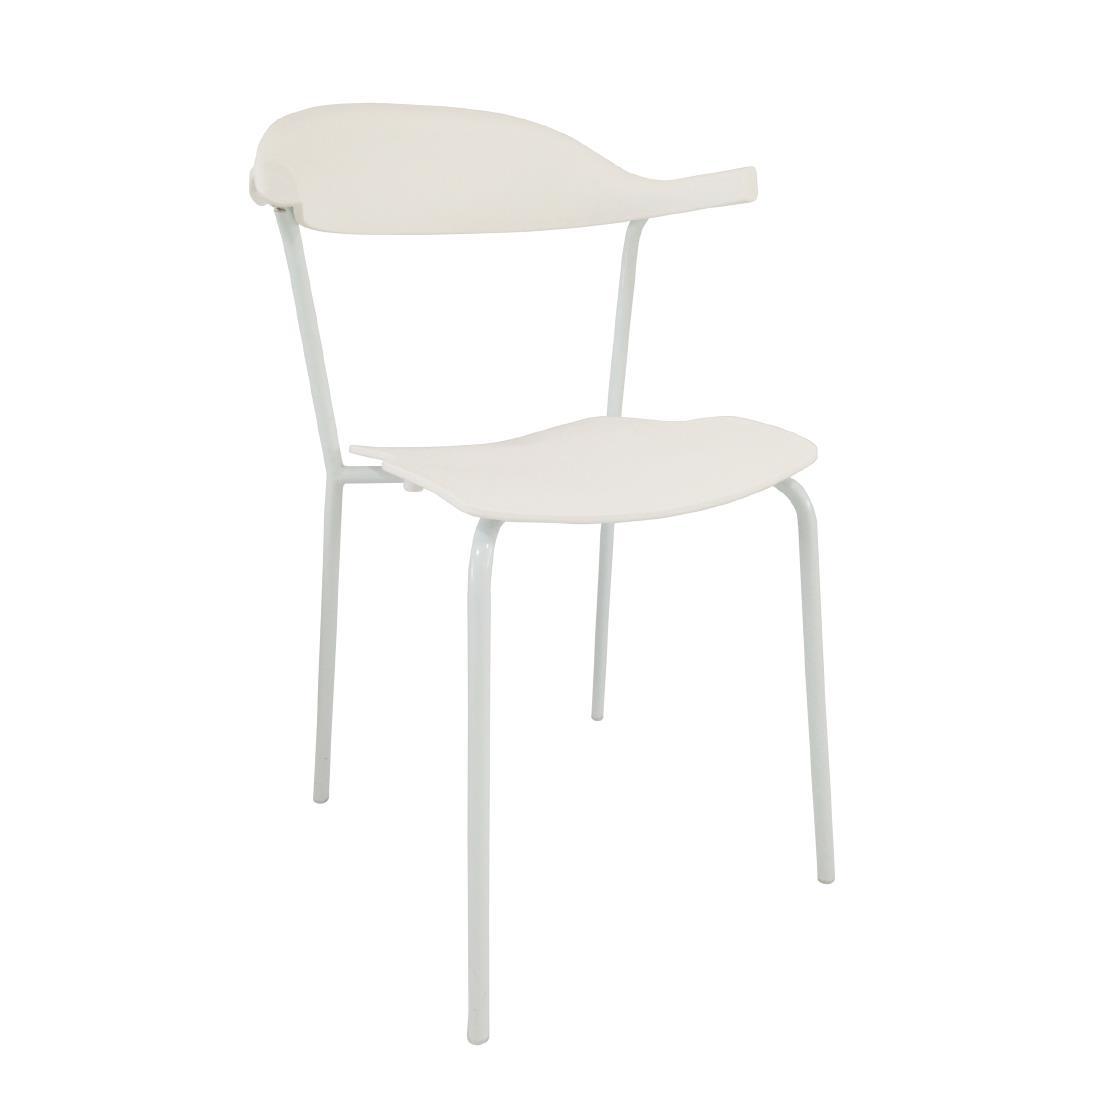 Bolero PP Wishbone Chair White (Pack of 4) - GR337  - 1